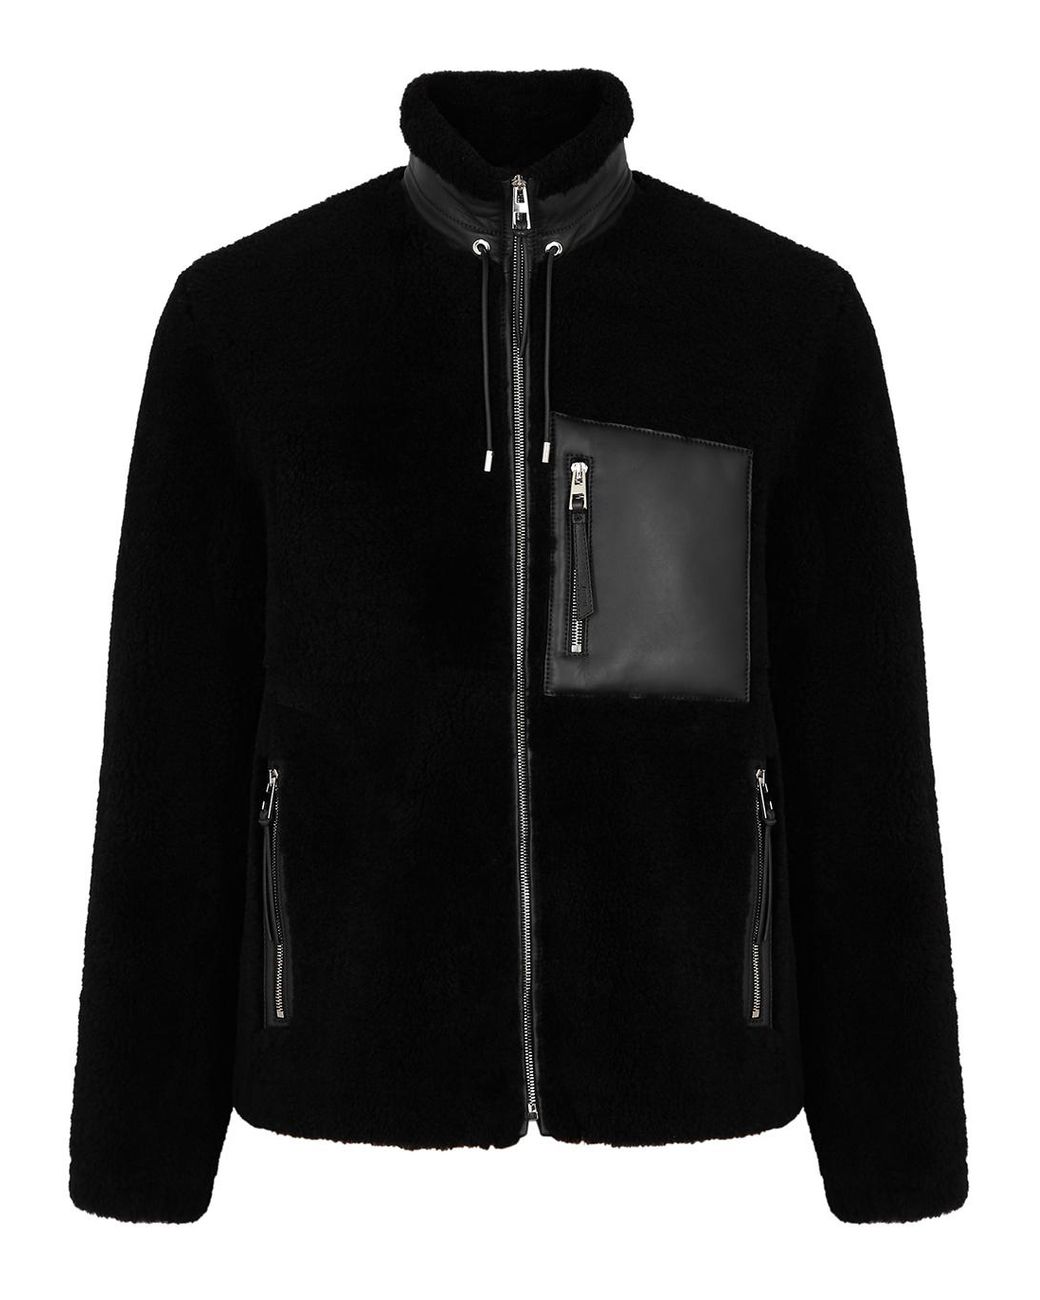 Loewe Leather Black Shearling Jacket for Men - Lyst